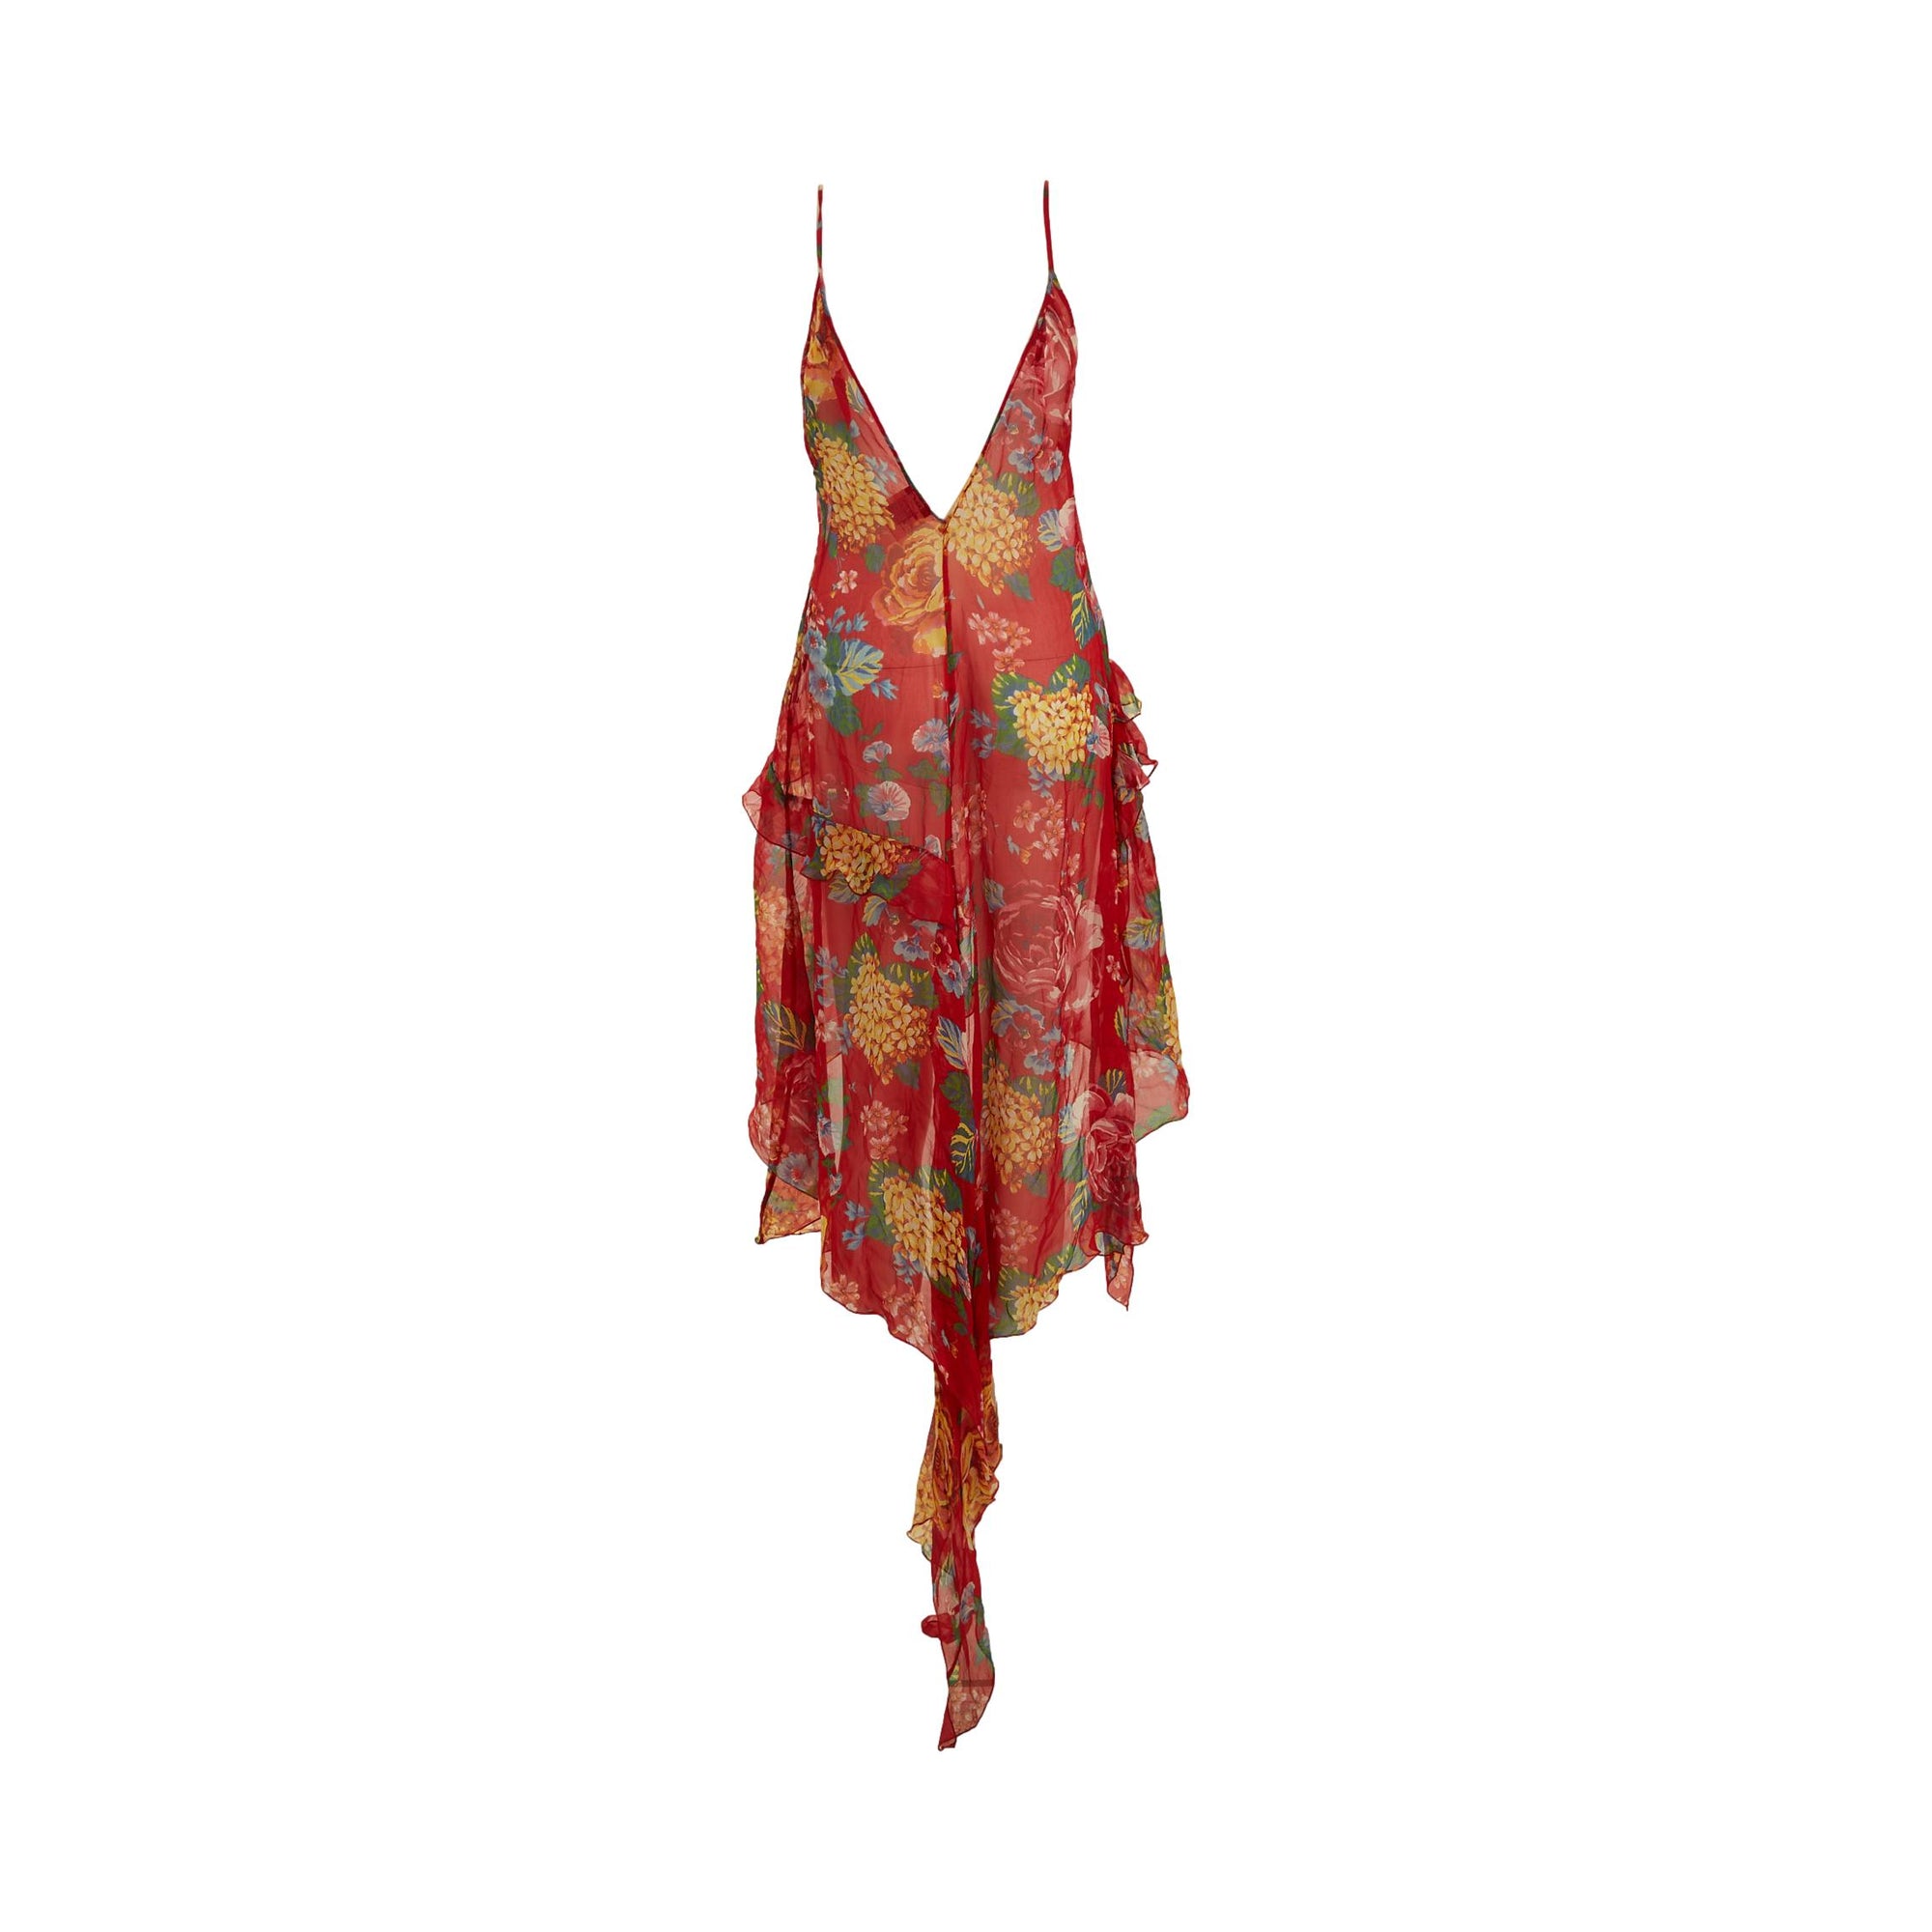 Dolce & Gabbana Red Floral Print Silk Dress